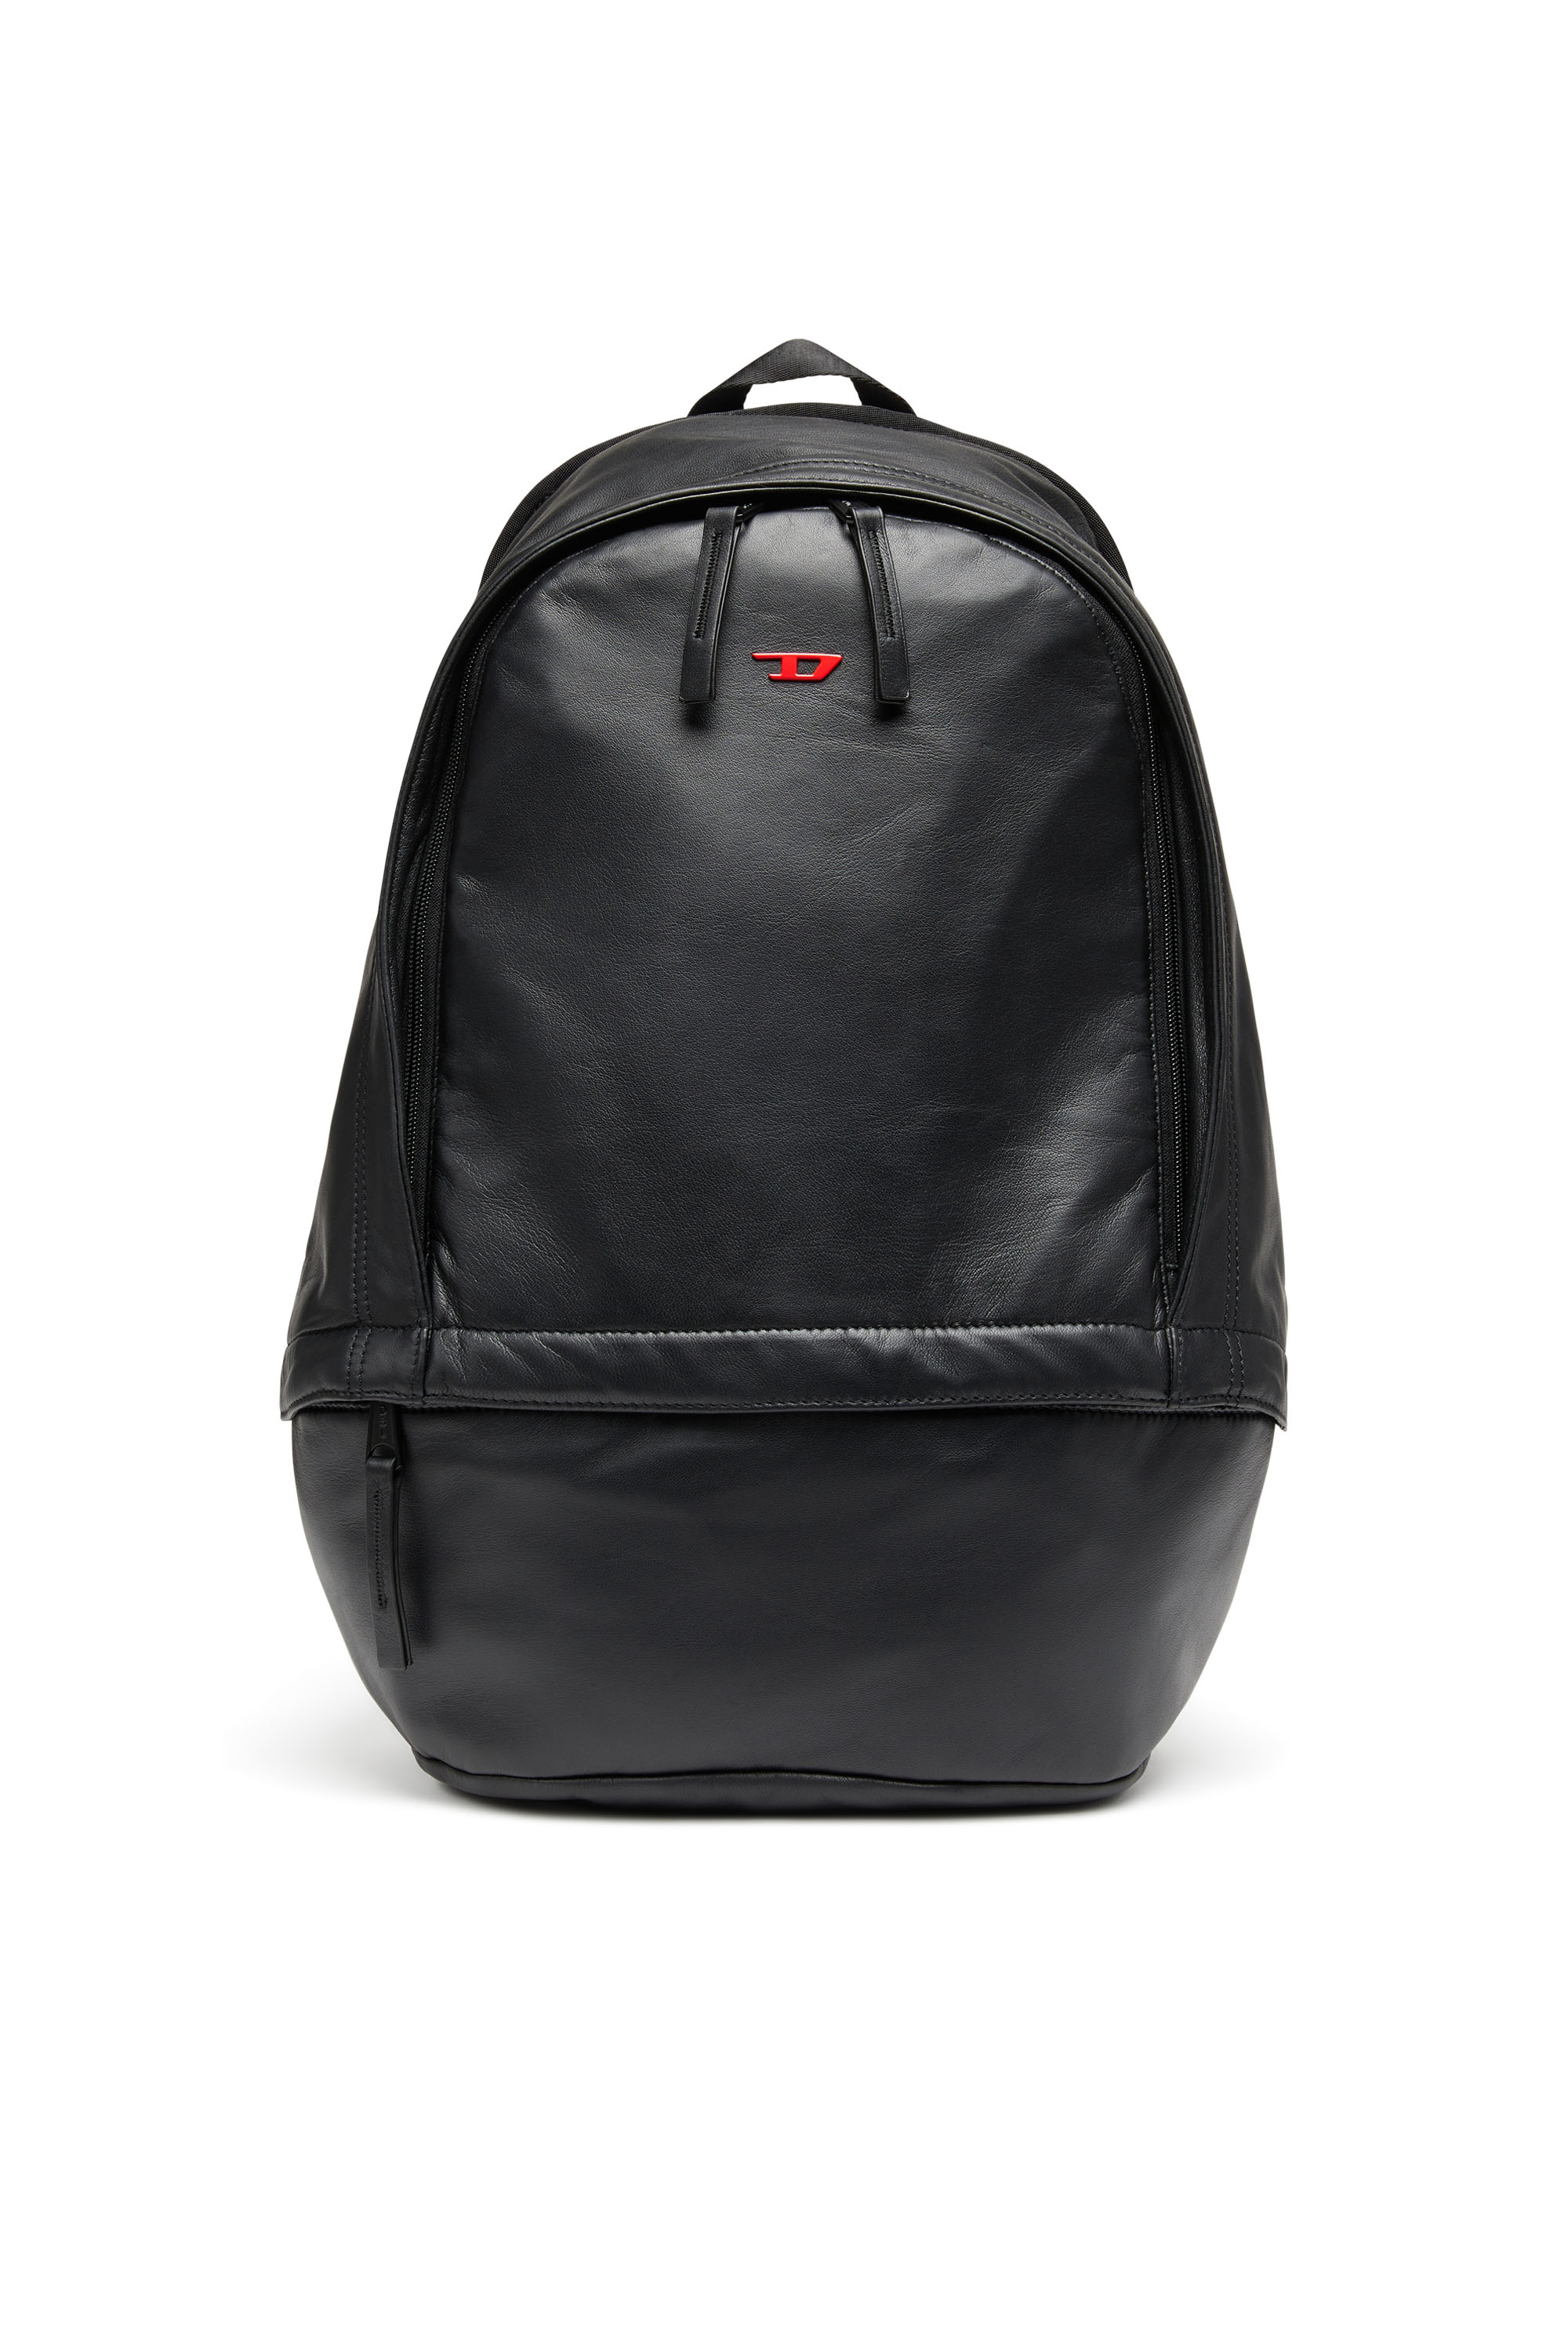 Diesel - Rave Backpack Backpack - Leather backpack with metal D - Backpacks - Unisex - Black